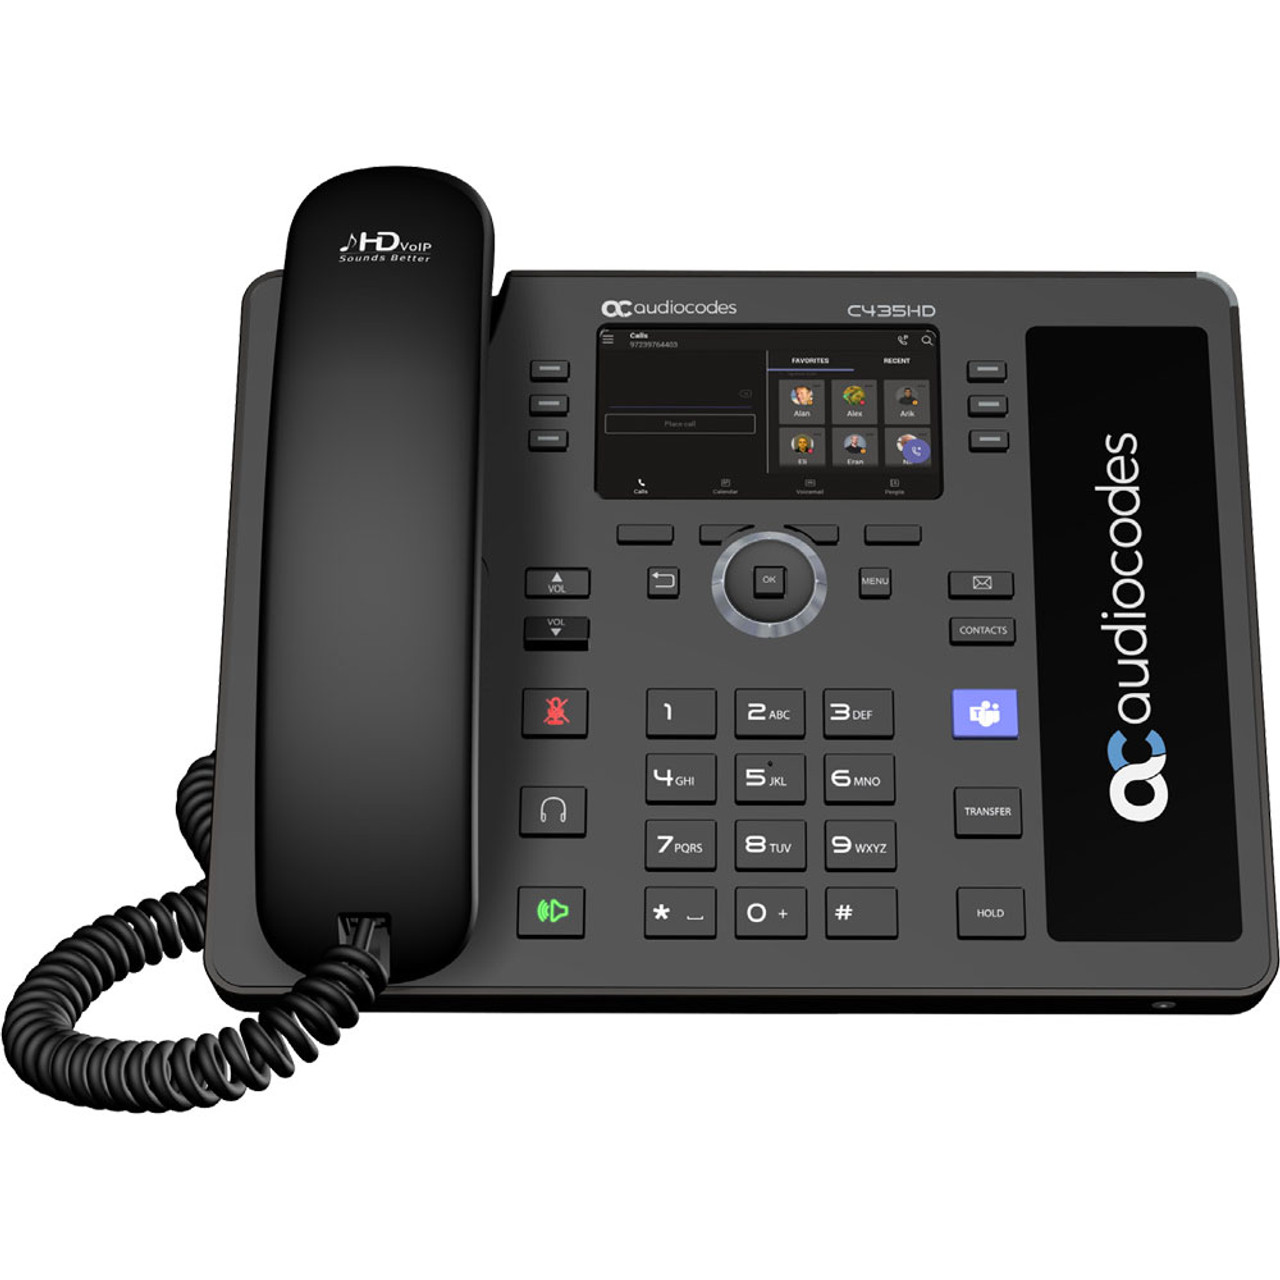 Audiocodes 435hd phone